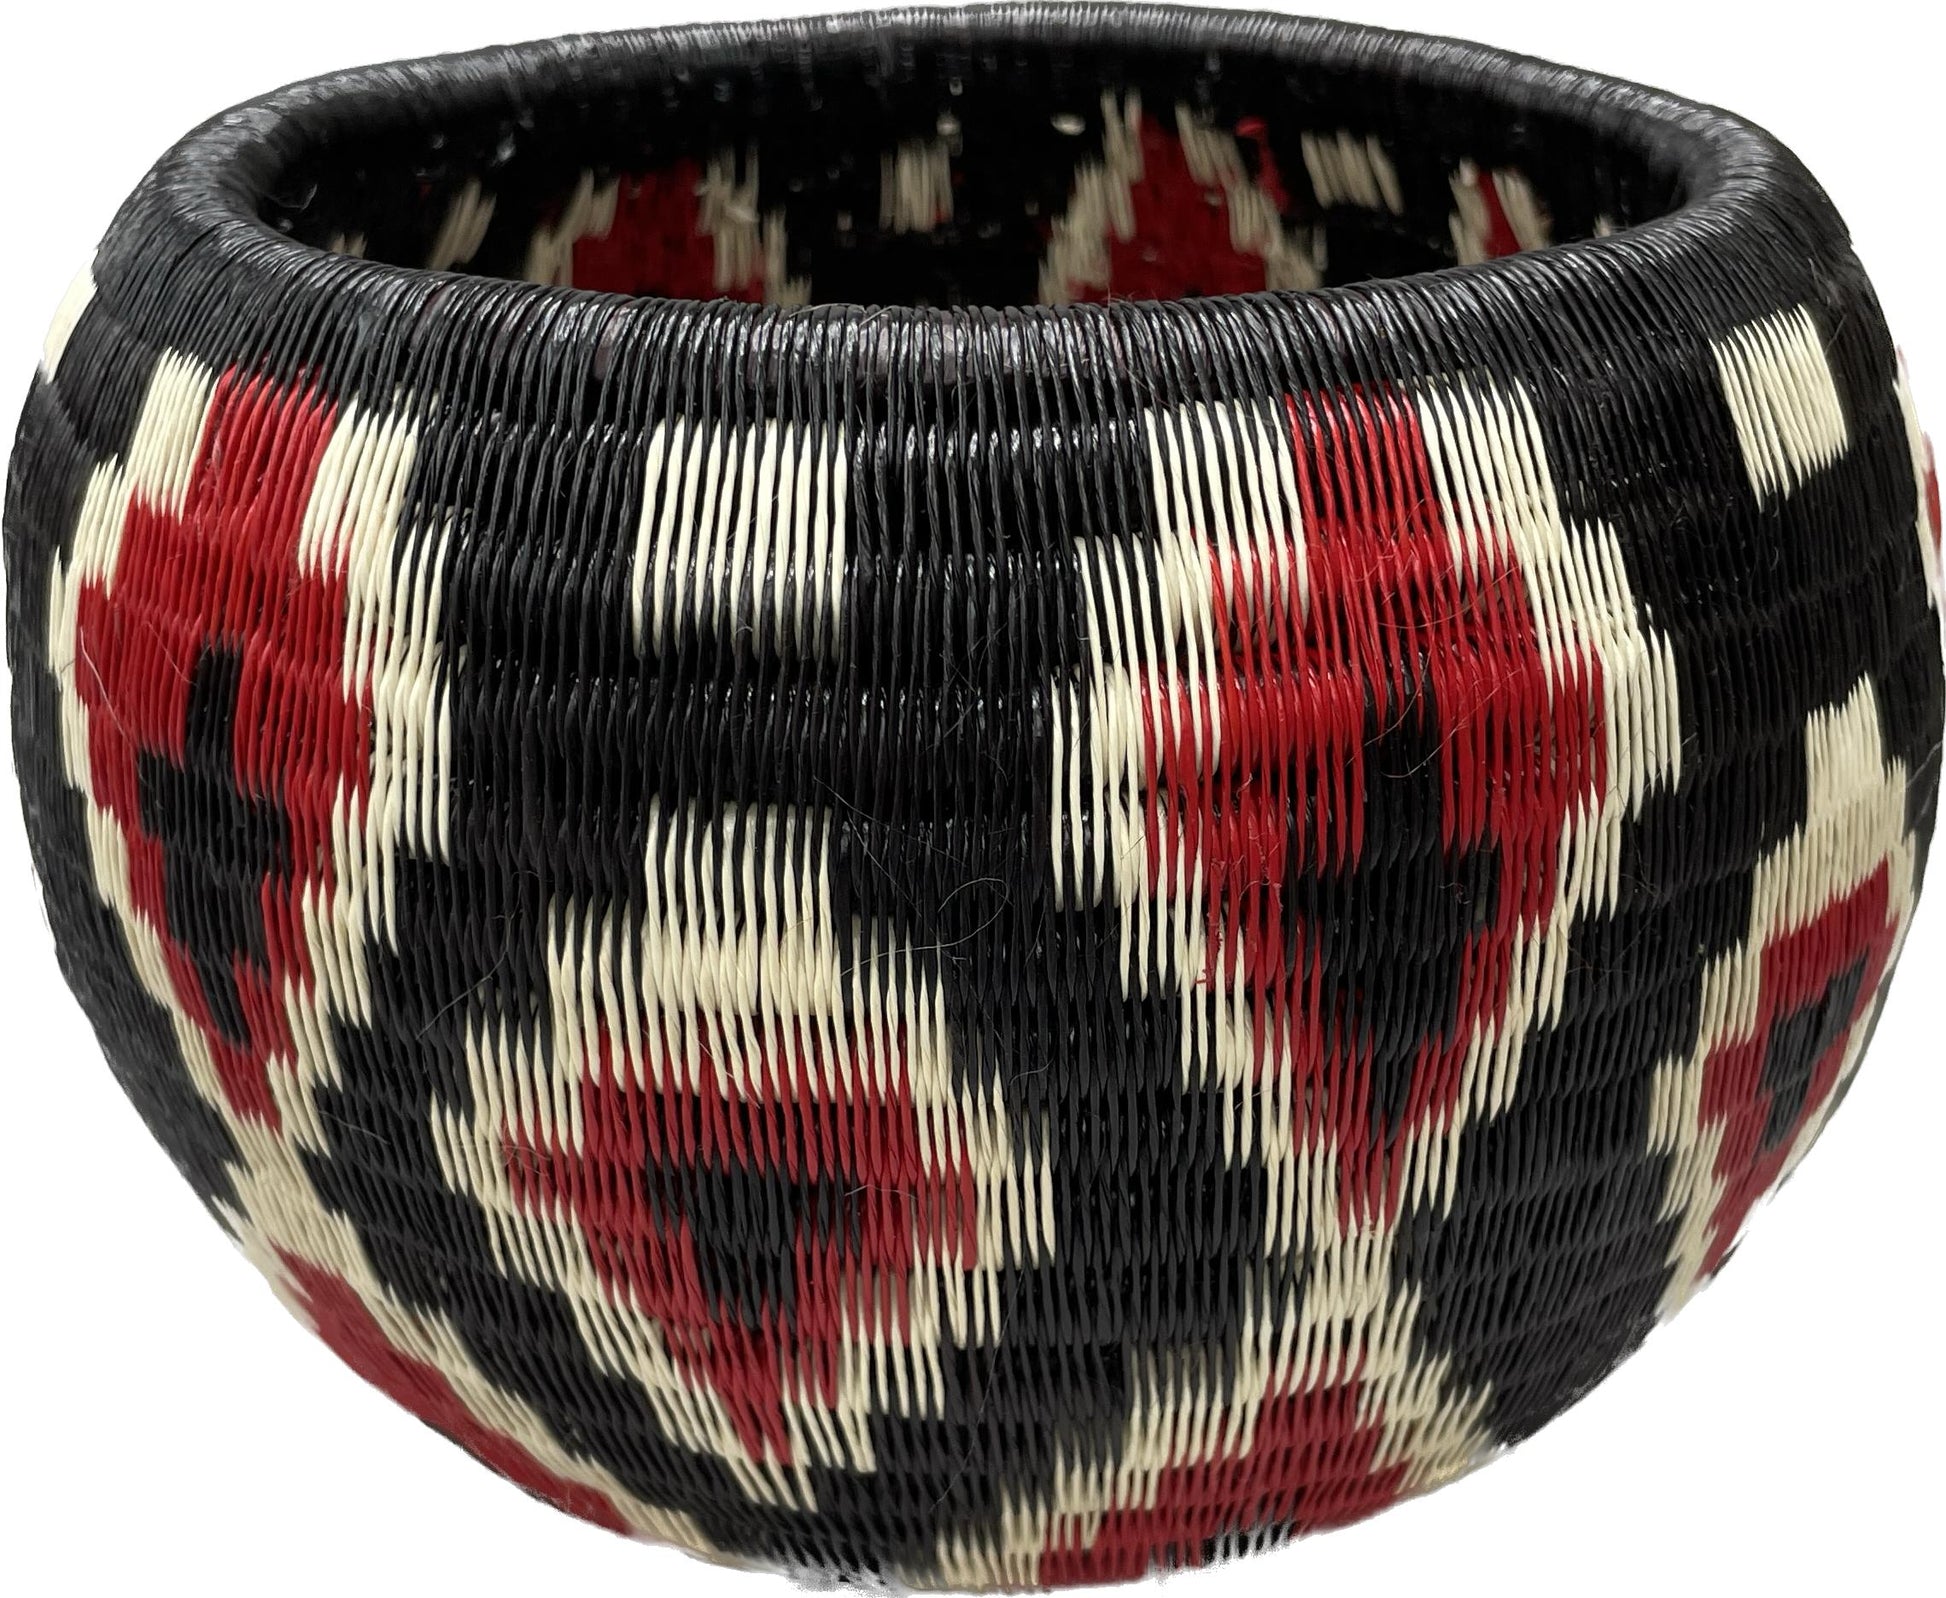 Wounaan Fine Art Vase Bowl Basket WV114